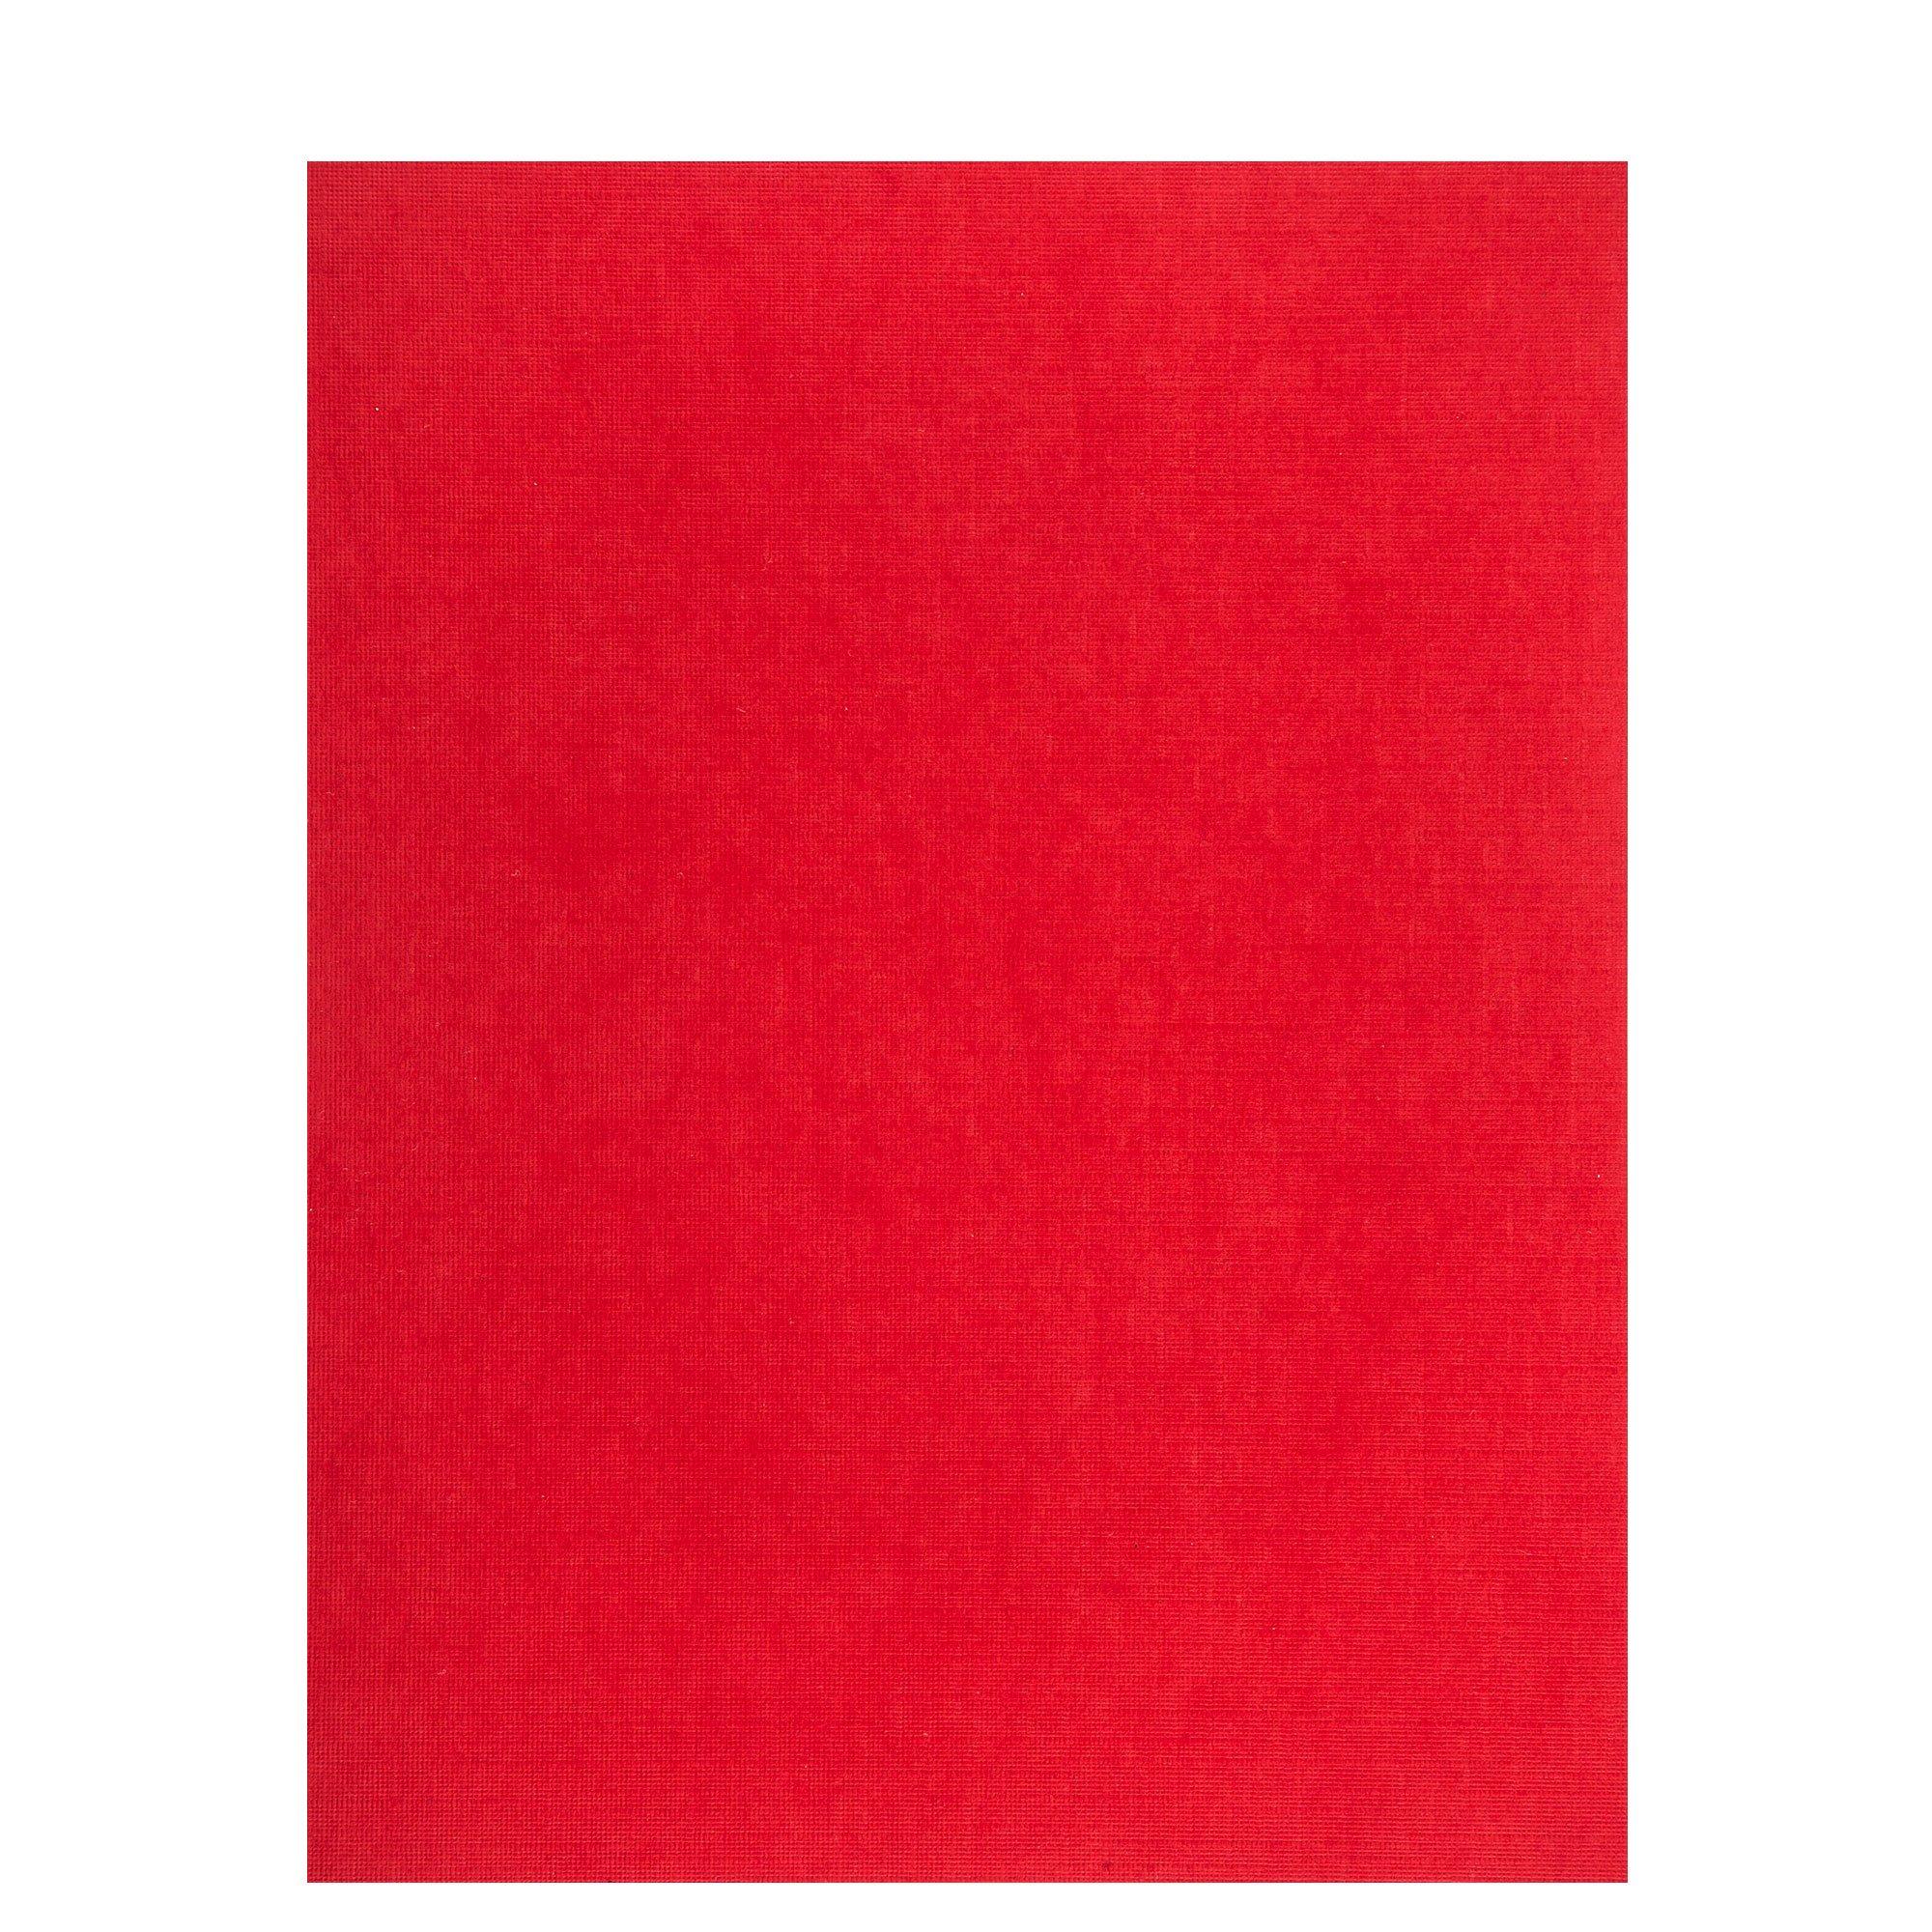 DARK RED - Textured 12x12 Cardstock - Encore Paper